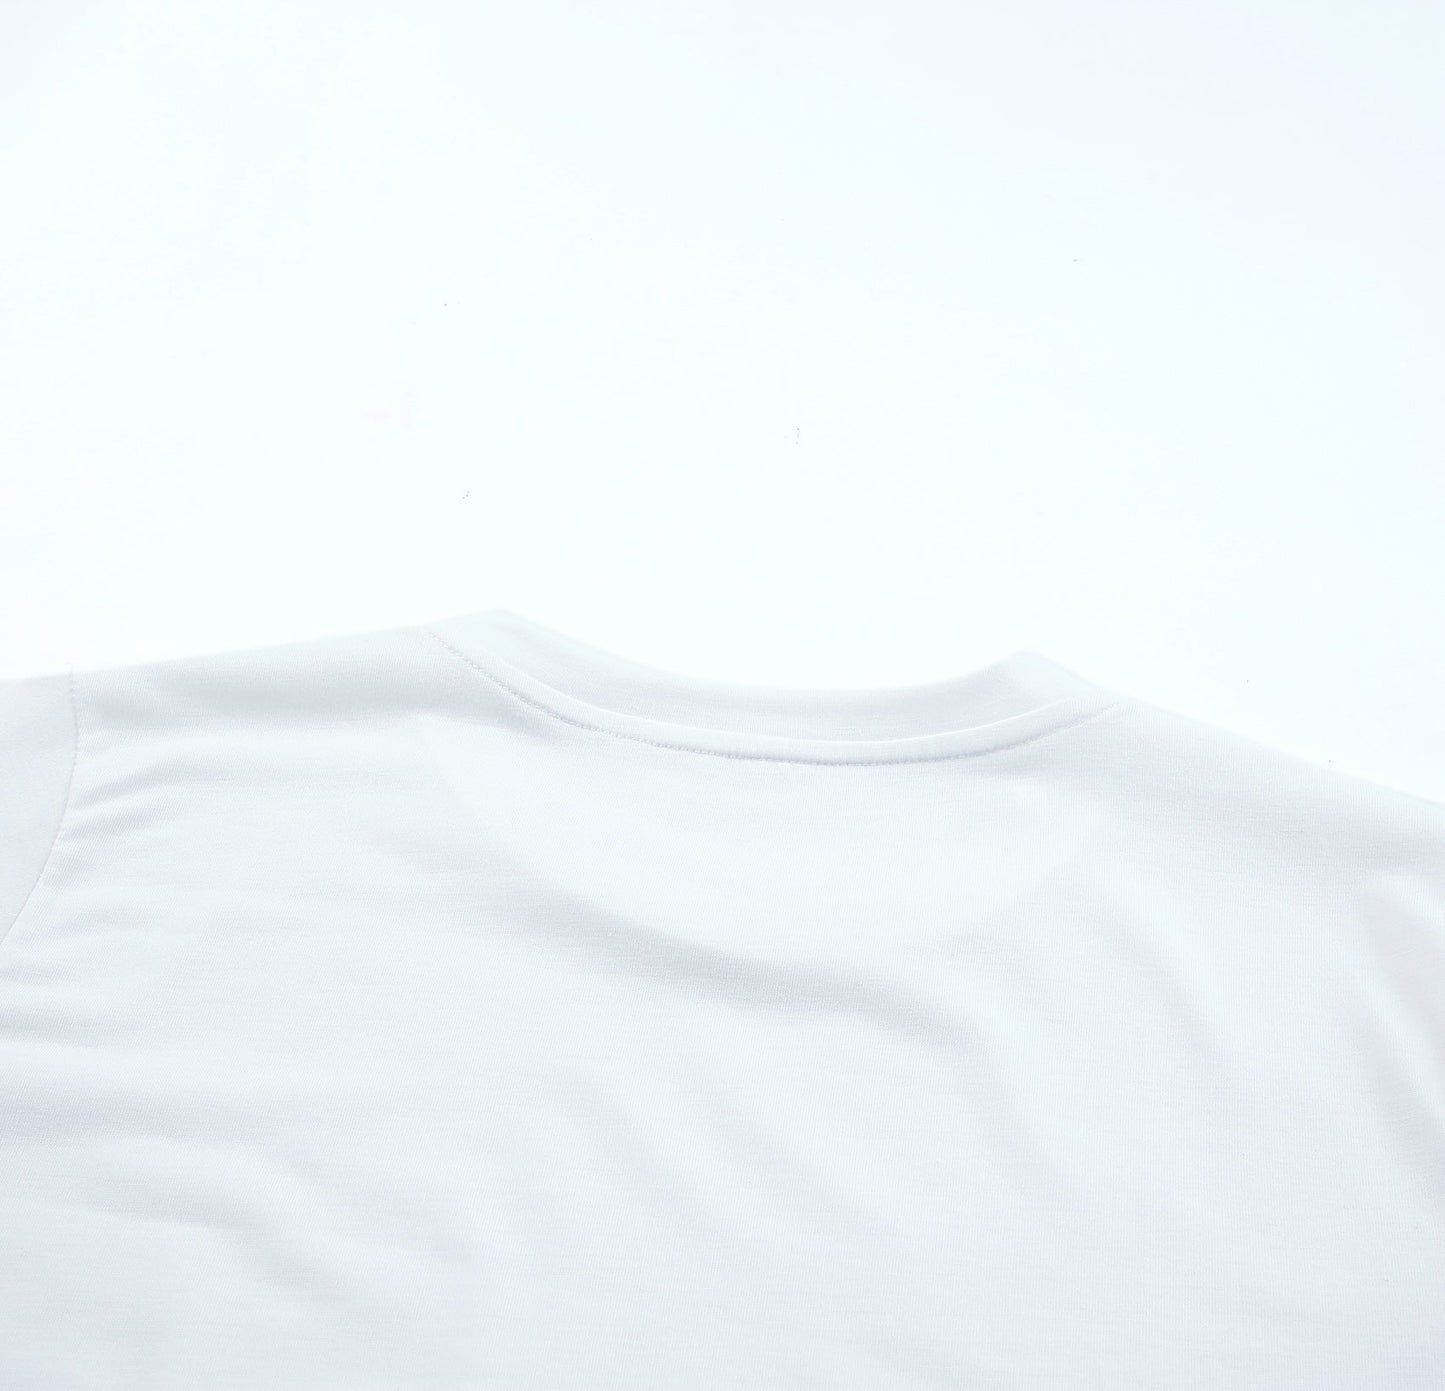 Black Round Neck Rolled Sleeve Plus Size T-shirt